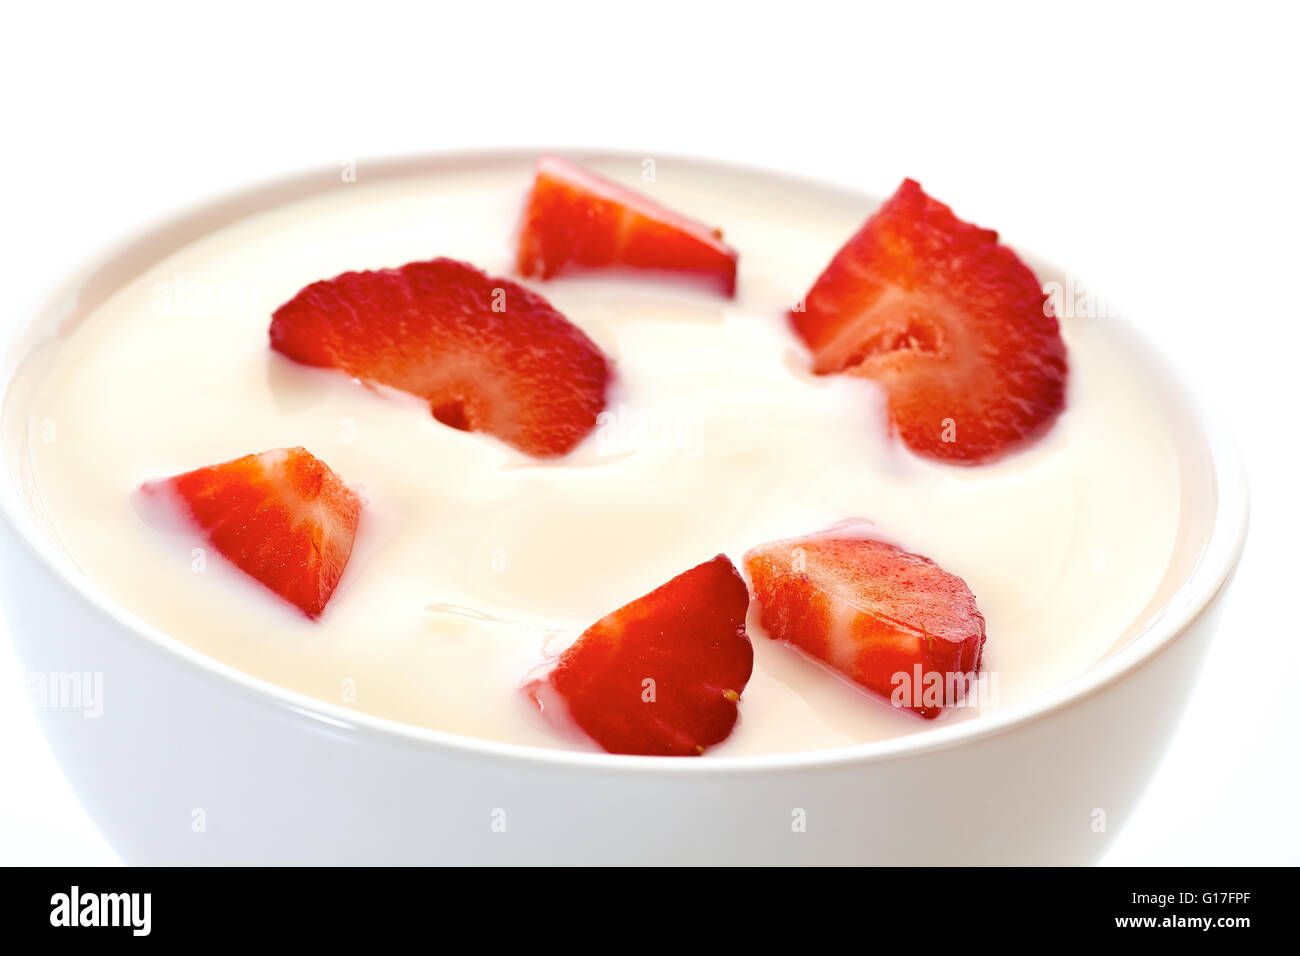 Yogurt with strawberries in bowl on white Stock Photo